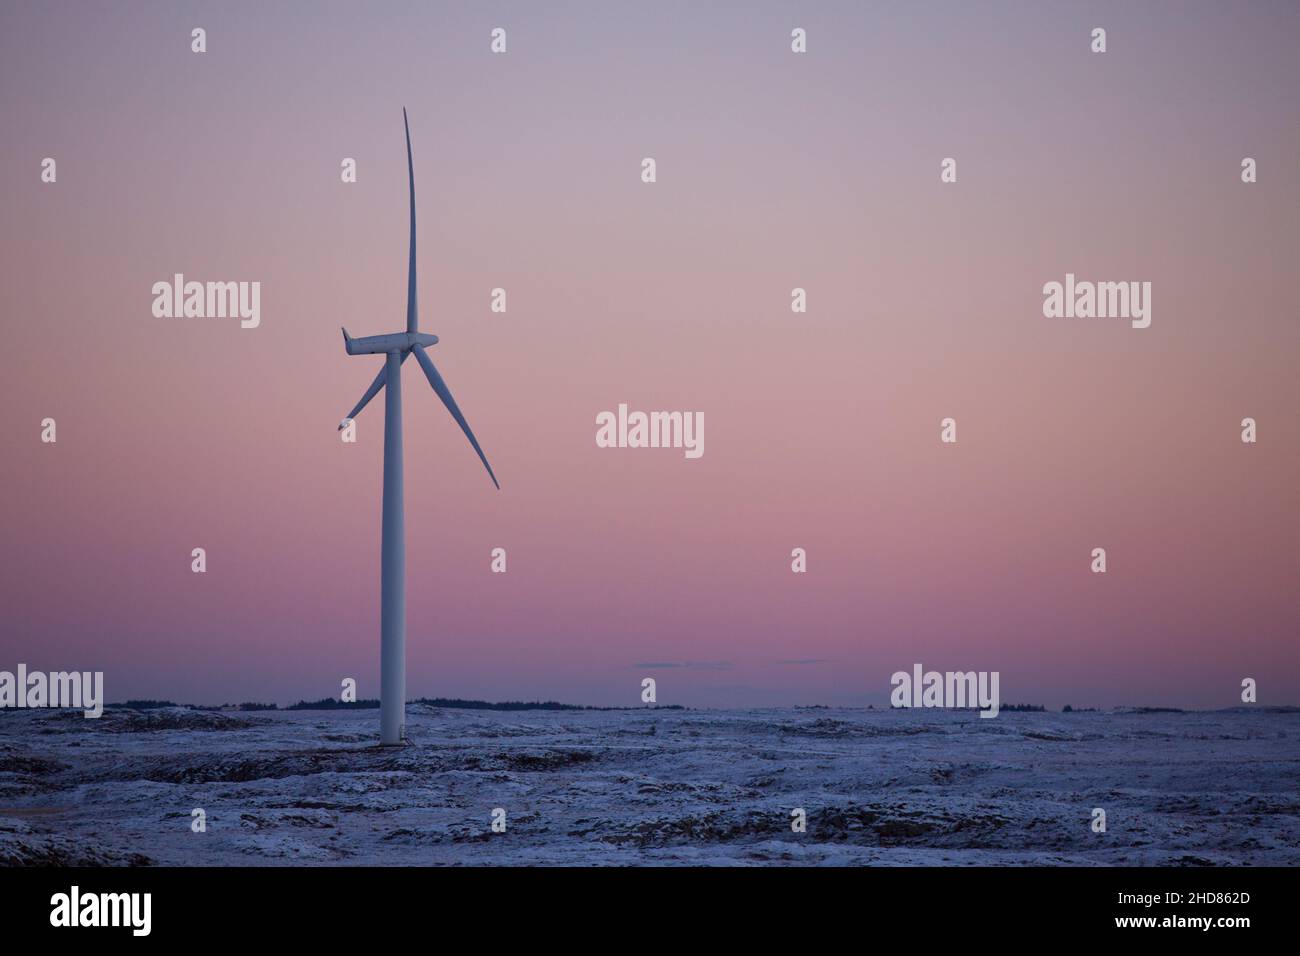 Windmills in sunset, Smøla ,Norway Stock Photo